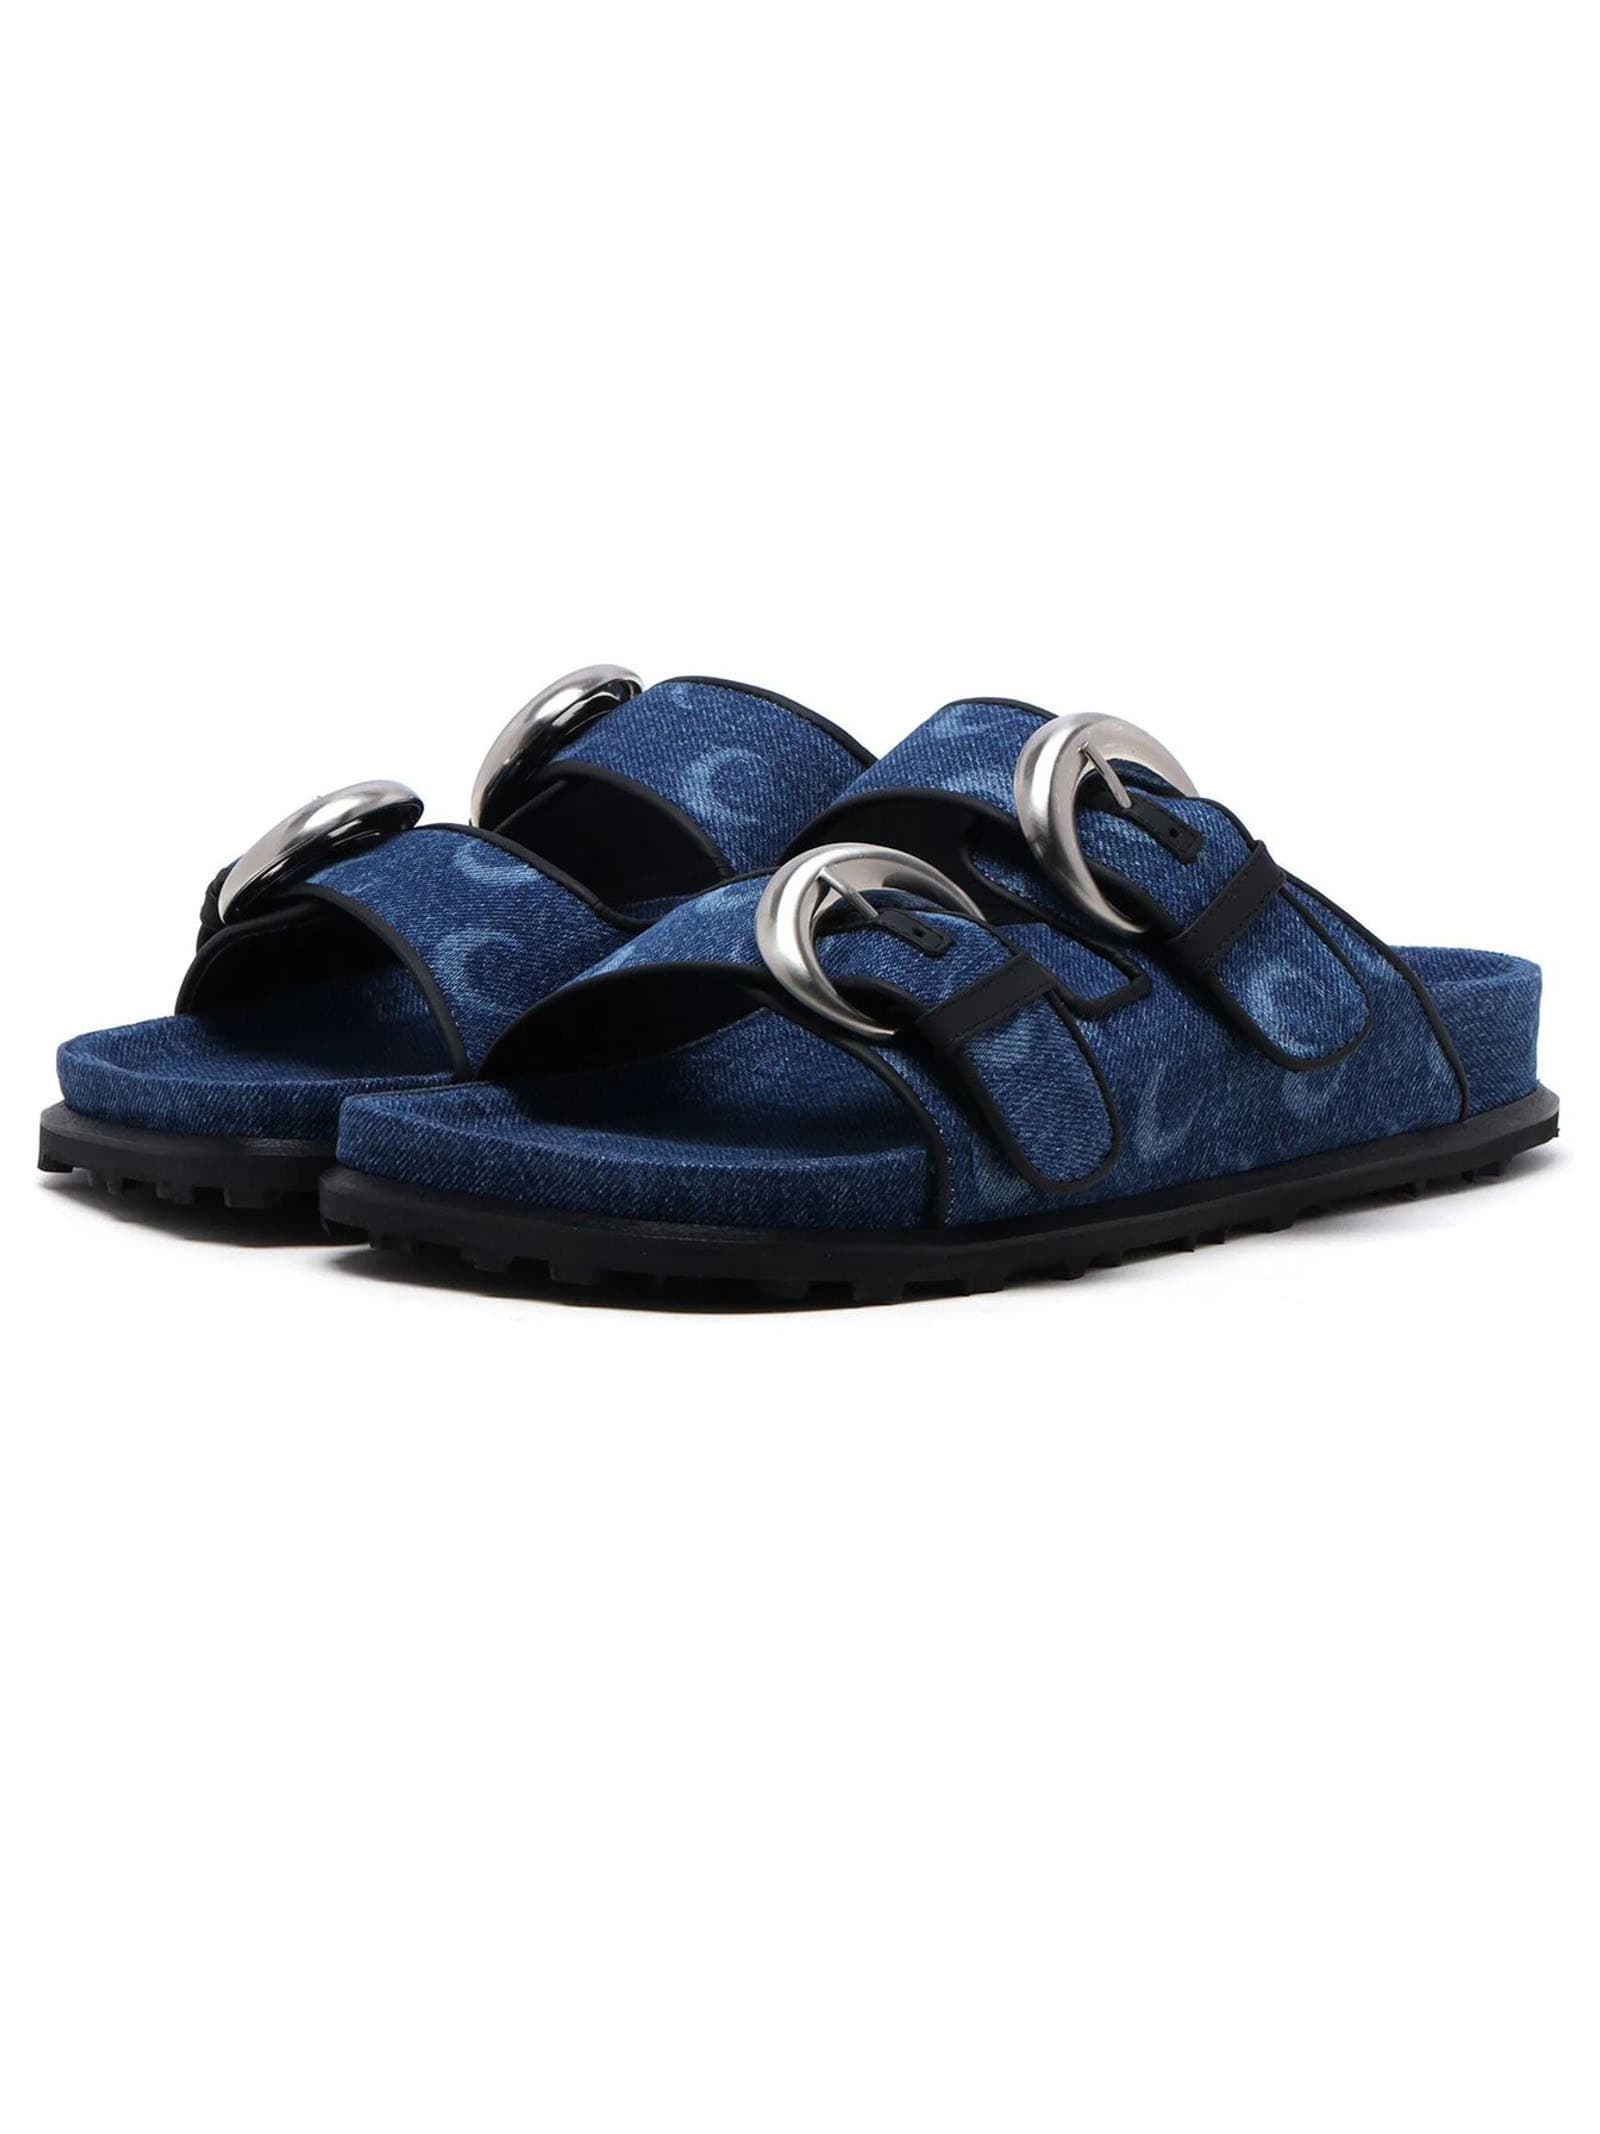 Shop Marine Serre Blue Cotton Denim Sandals